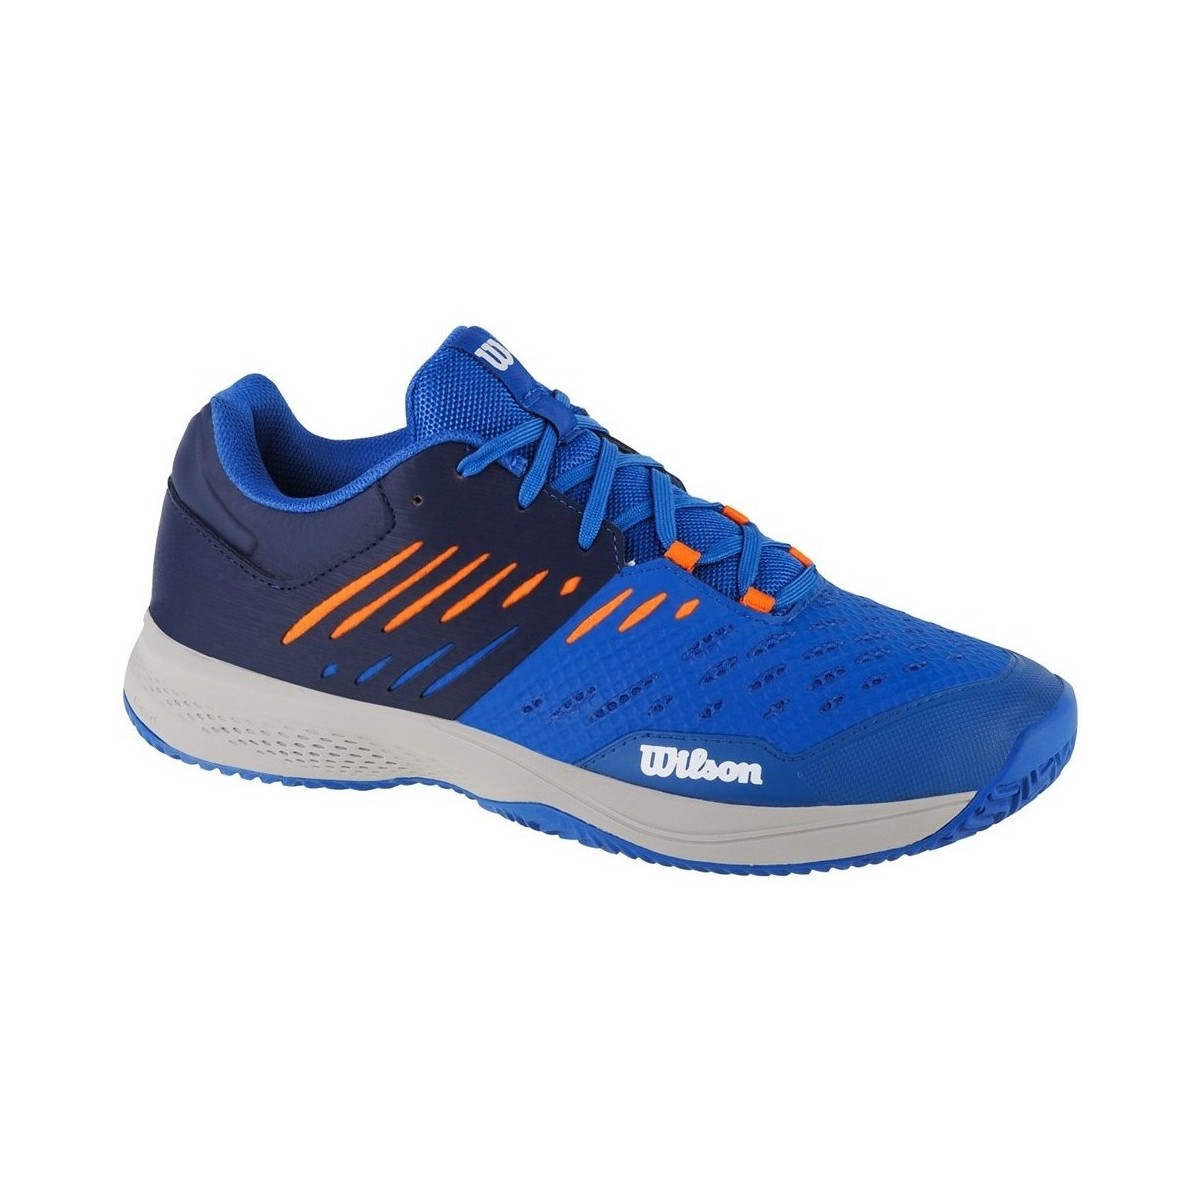 Pantofi Bărbați Tenis Wilson Kaos Comp 30 albastru